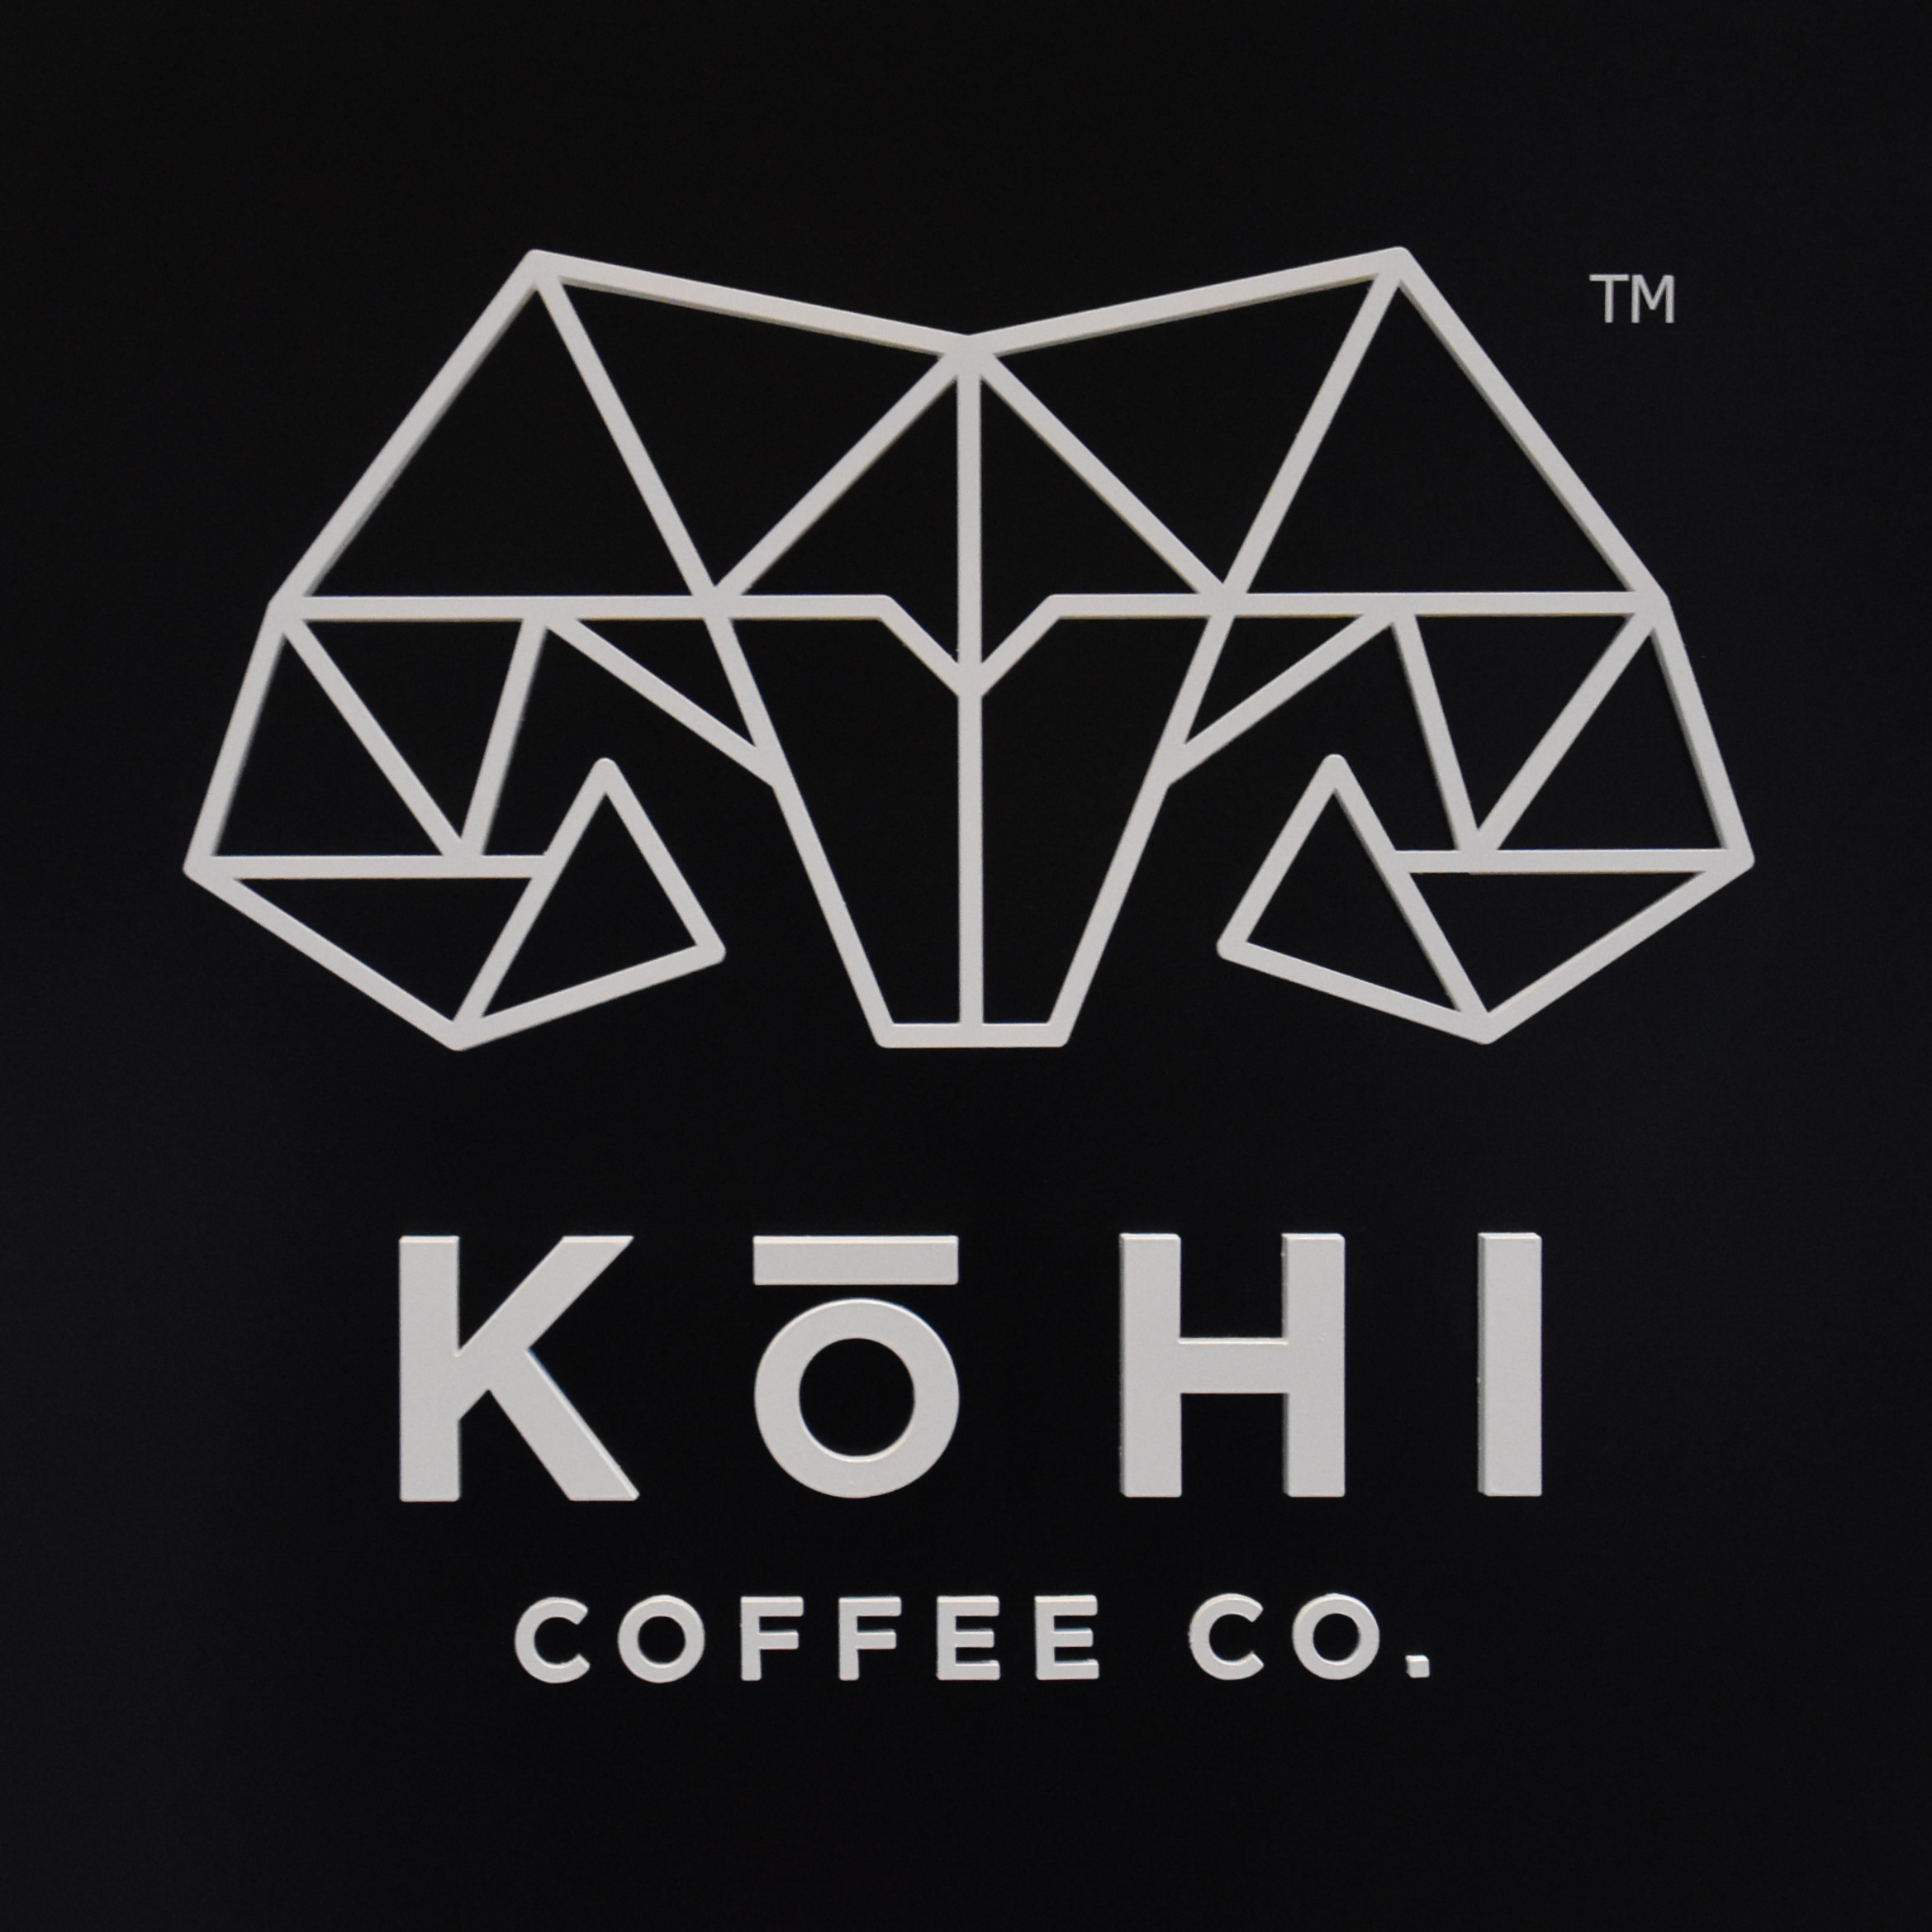 The Kōhi Coffee Co. logo from outside its Boston store inside 125 Summer Street.